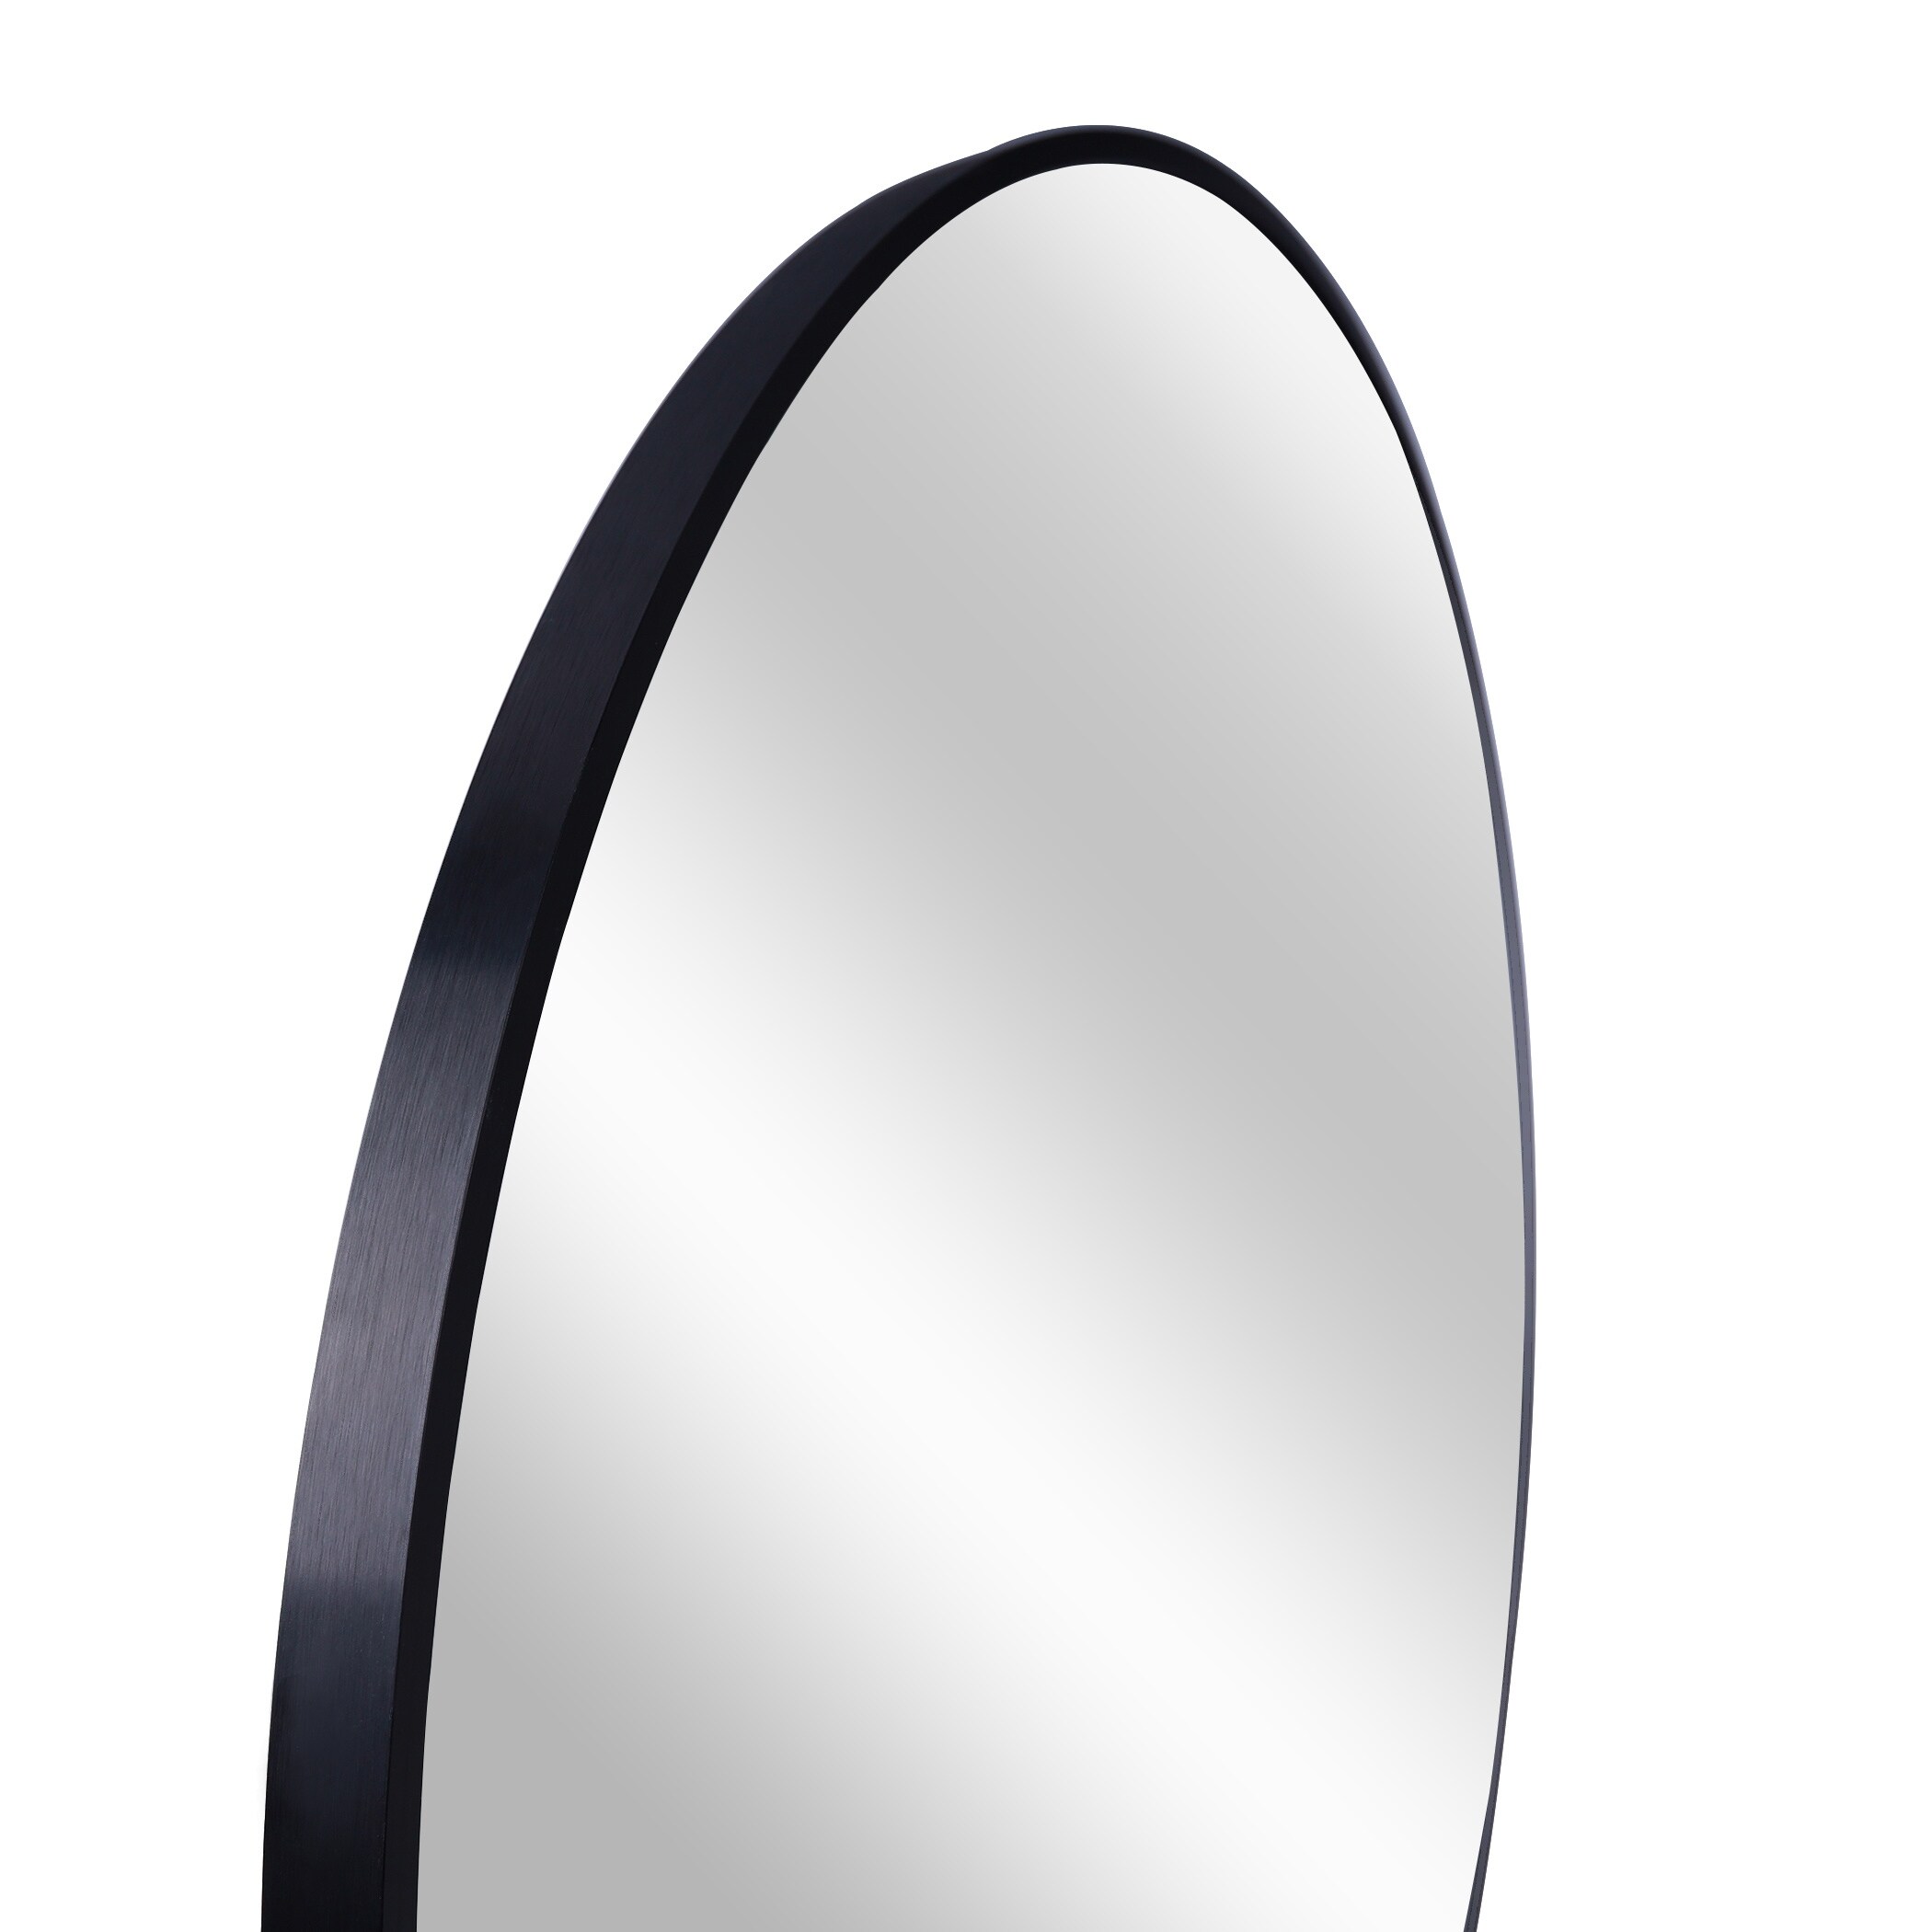 SDKOA Small Round Mirror 16 Inch with Black Aluminum Frame